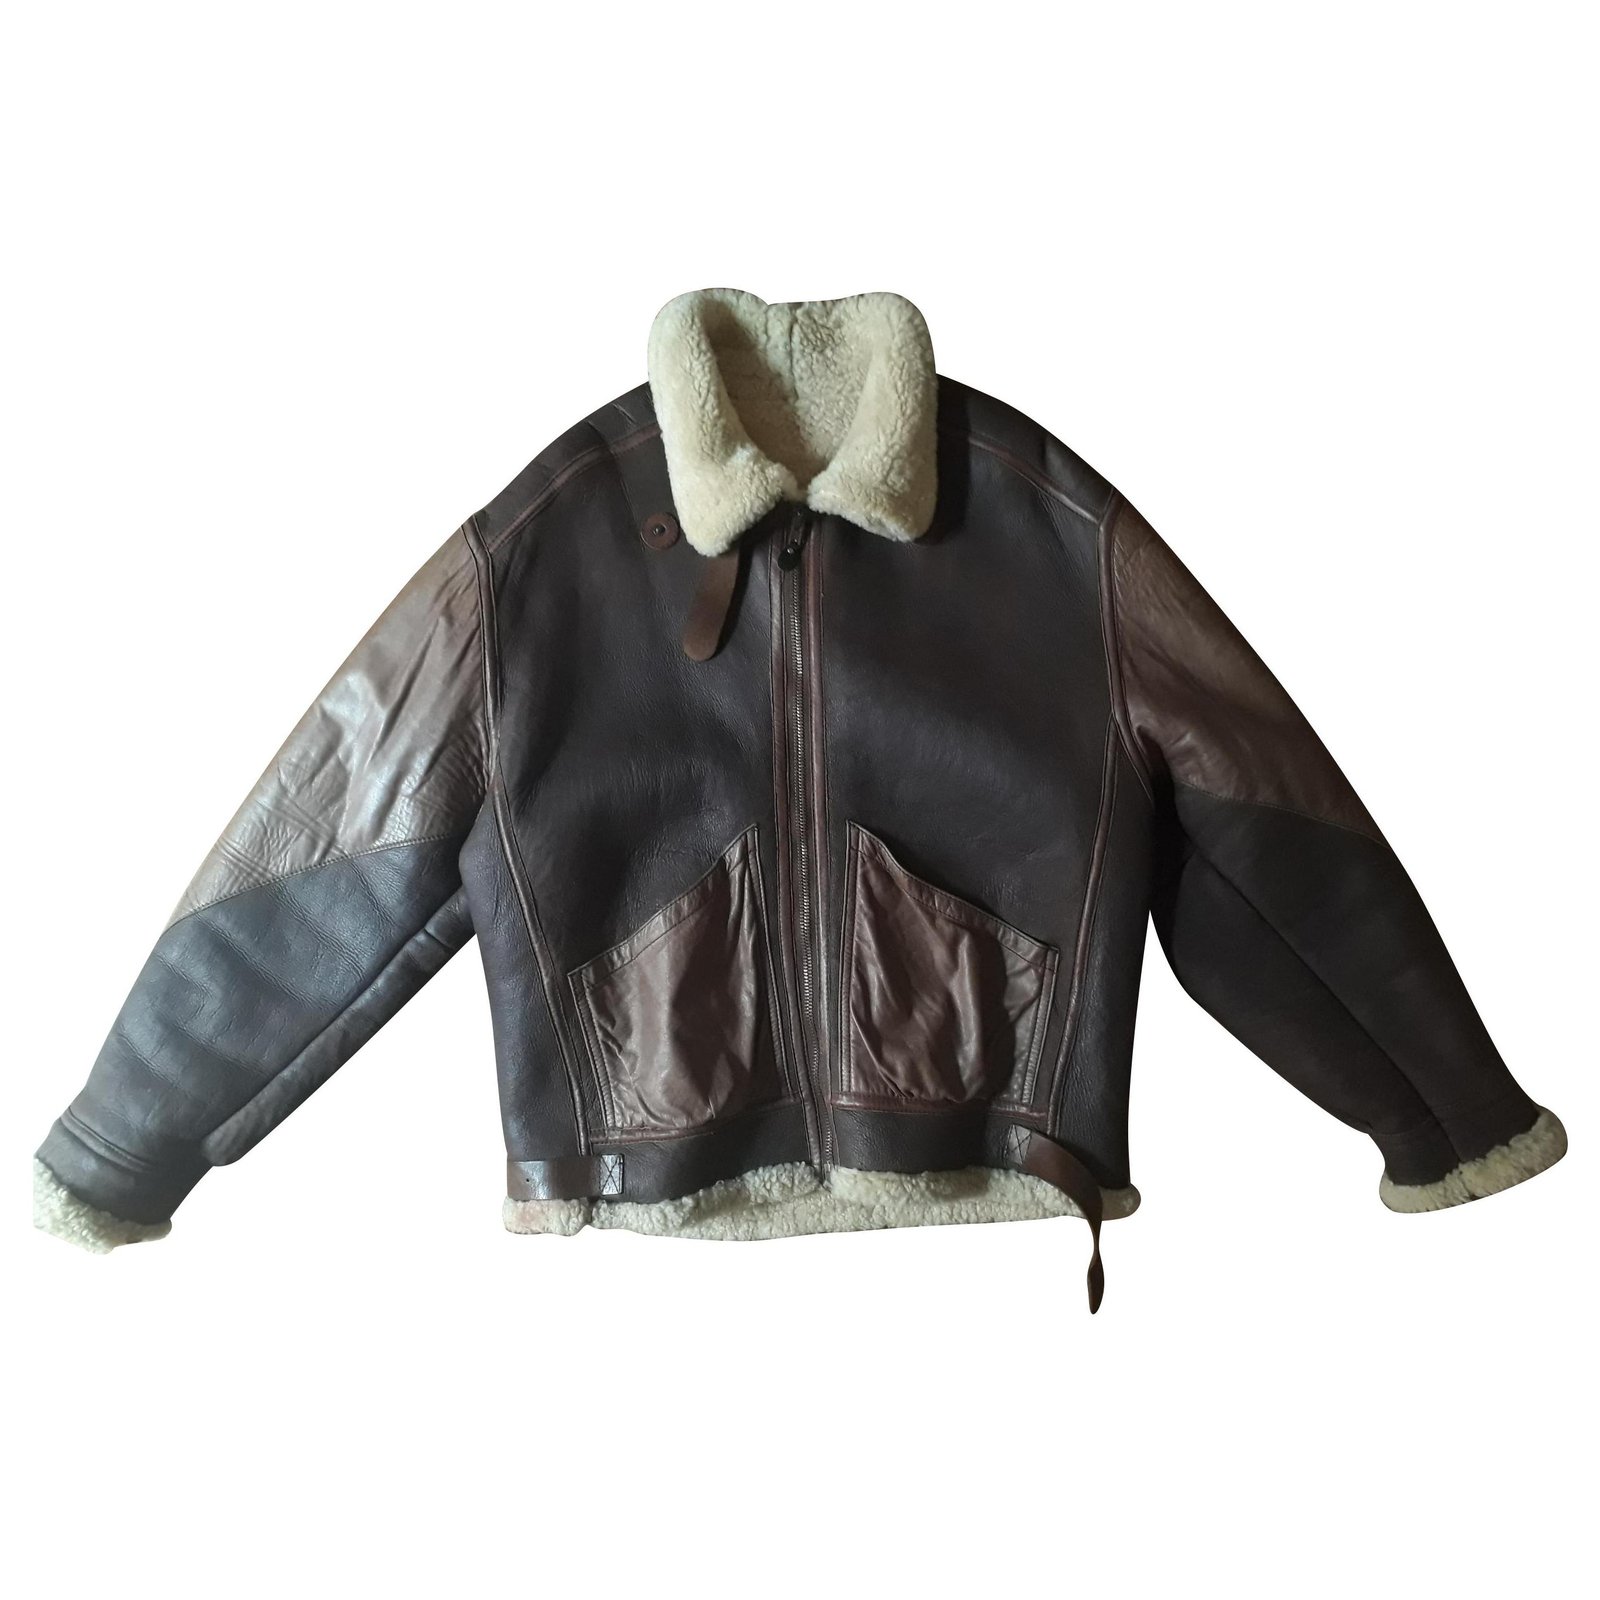 armani brown leather jacket